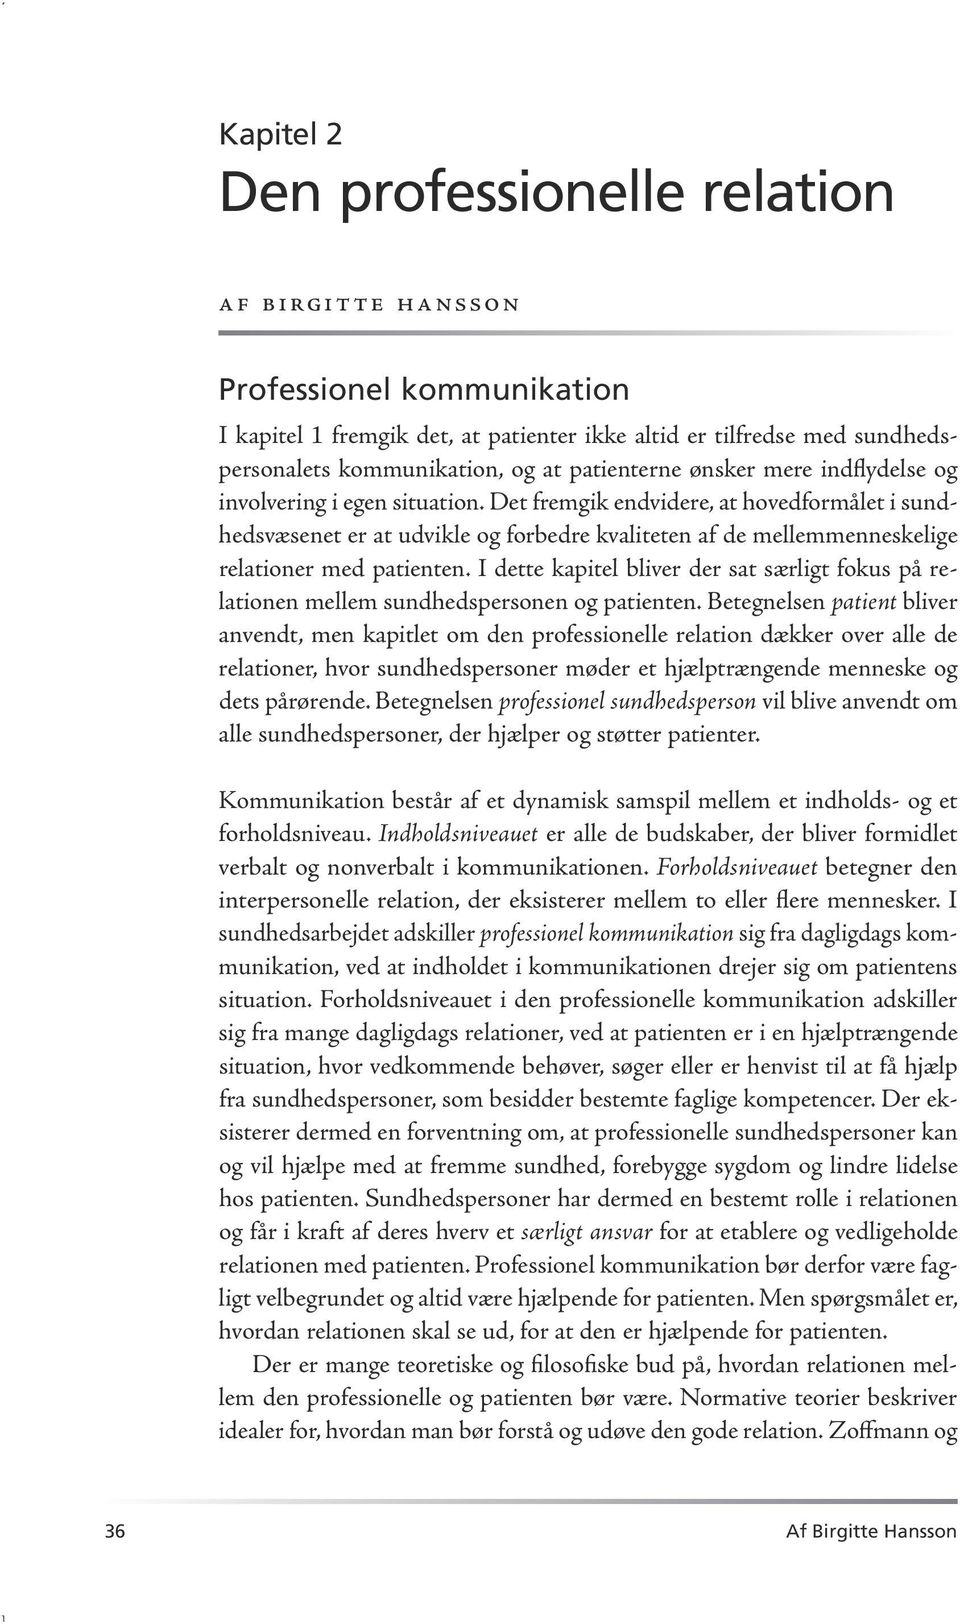 Den professionelle relation - PDF Free Download